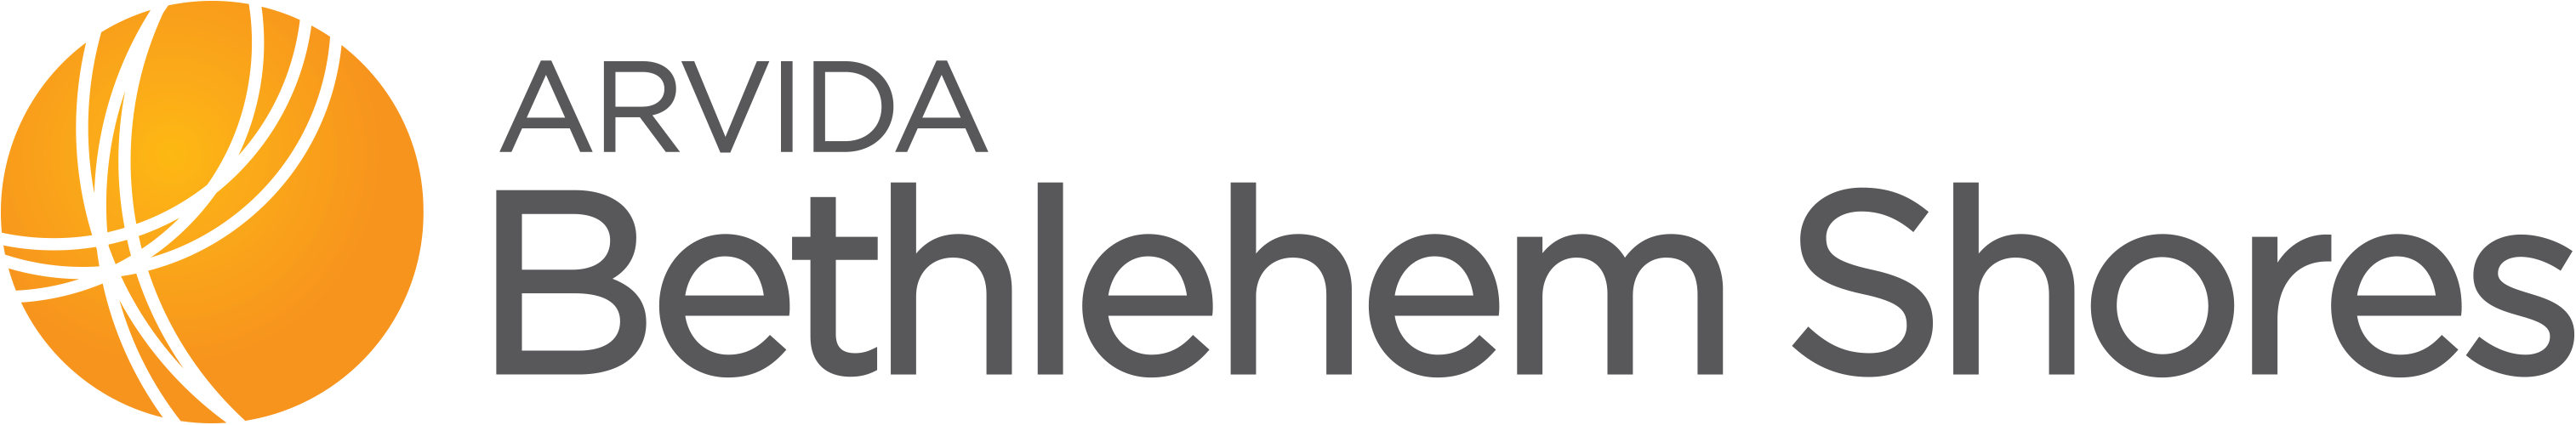 Bethlehem Shores | Arvida logo